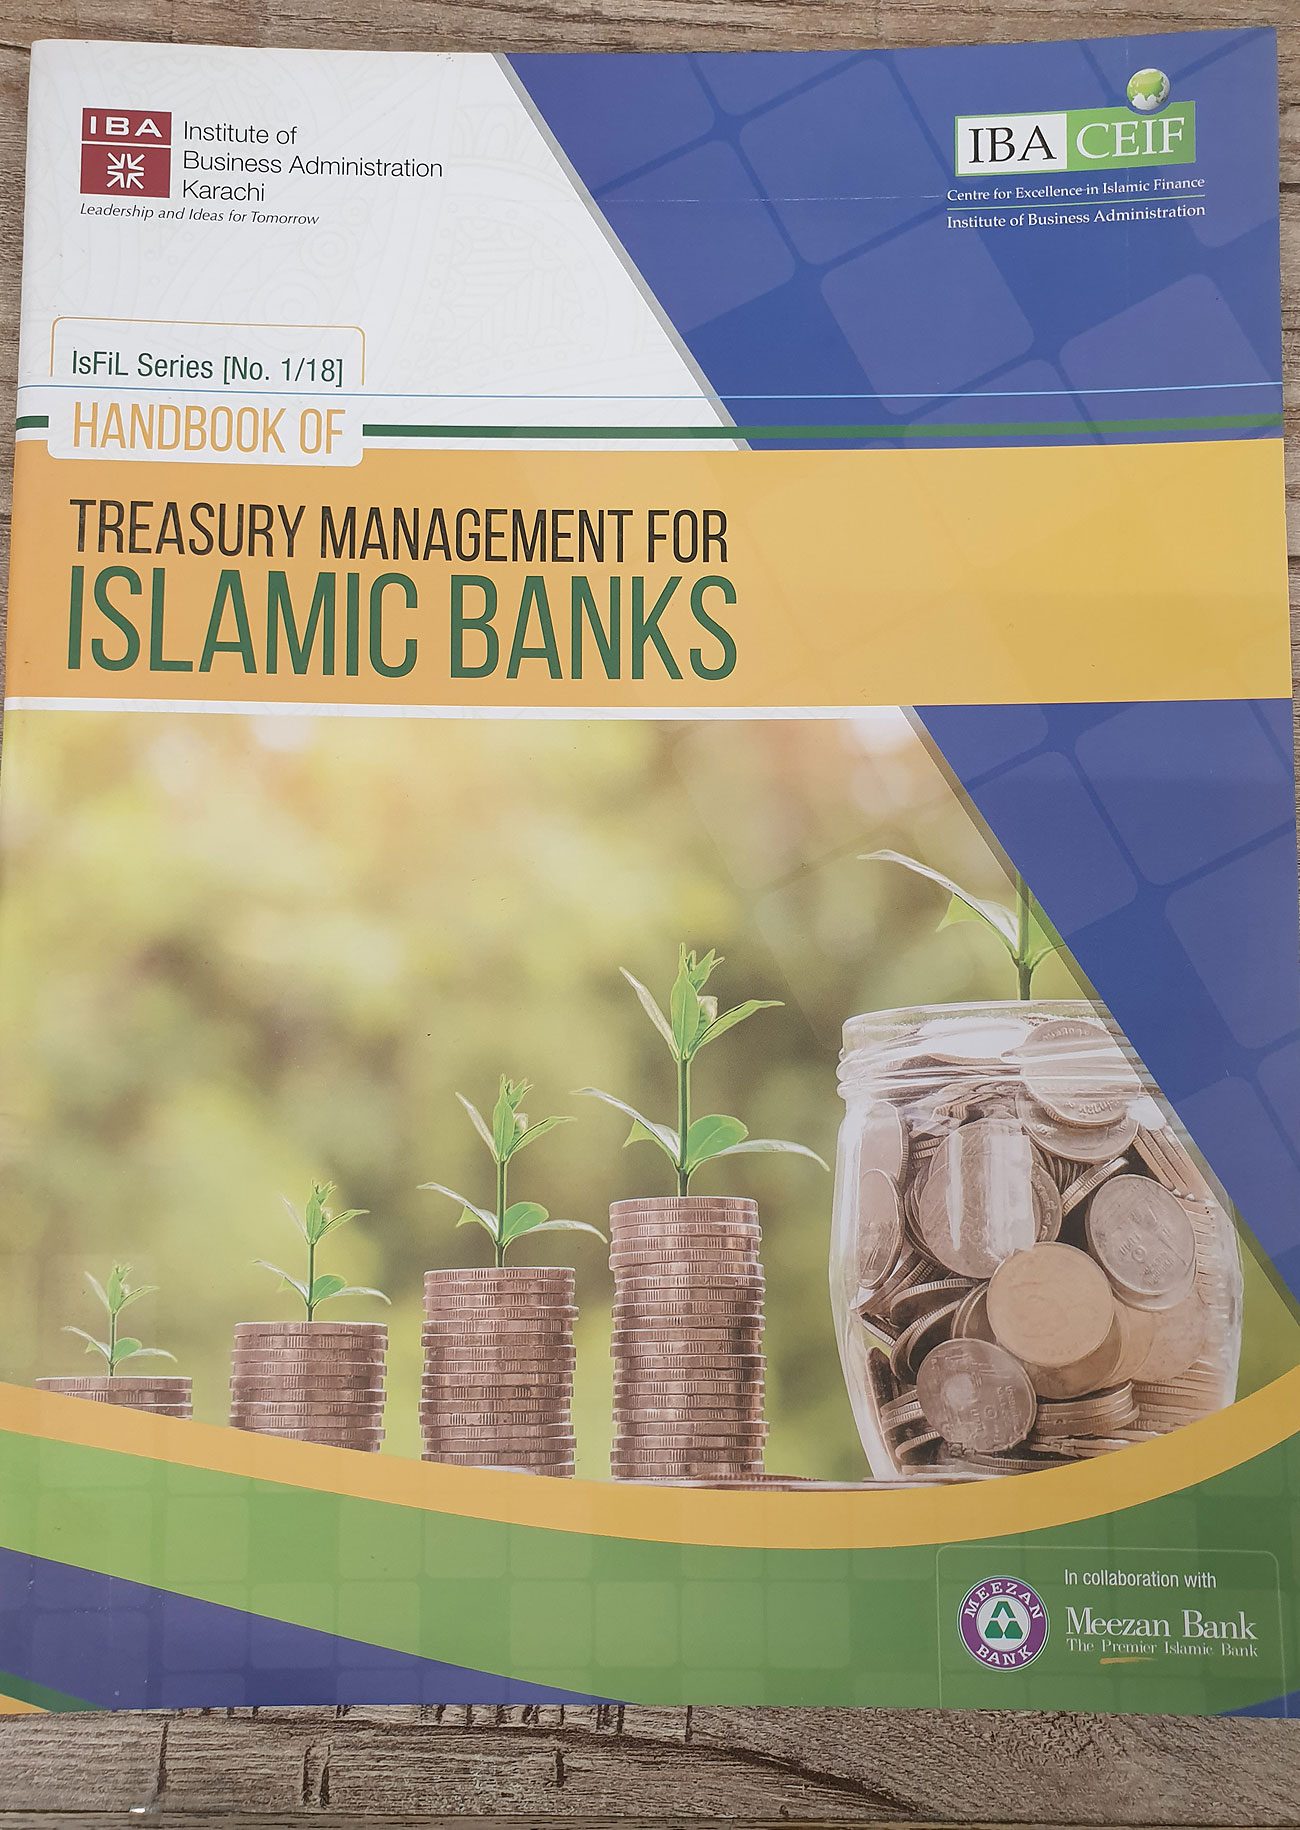 “Handbook of Treasury Management For Islamic Banks